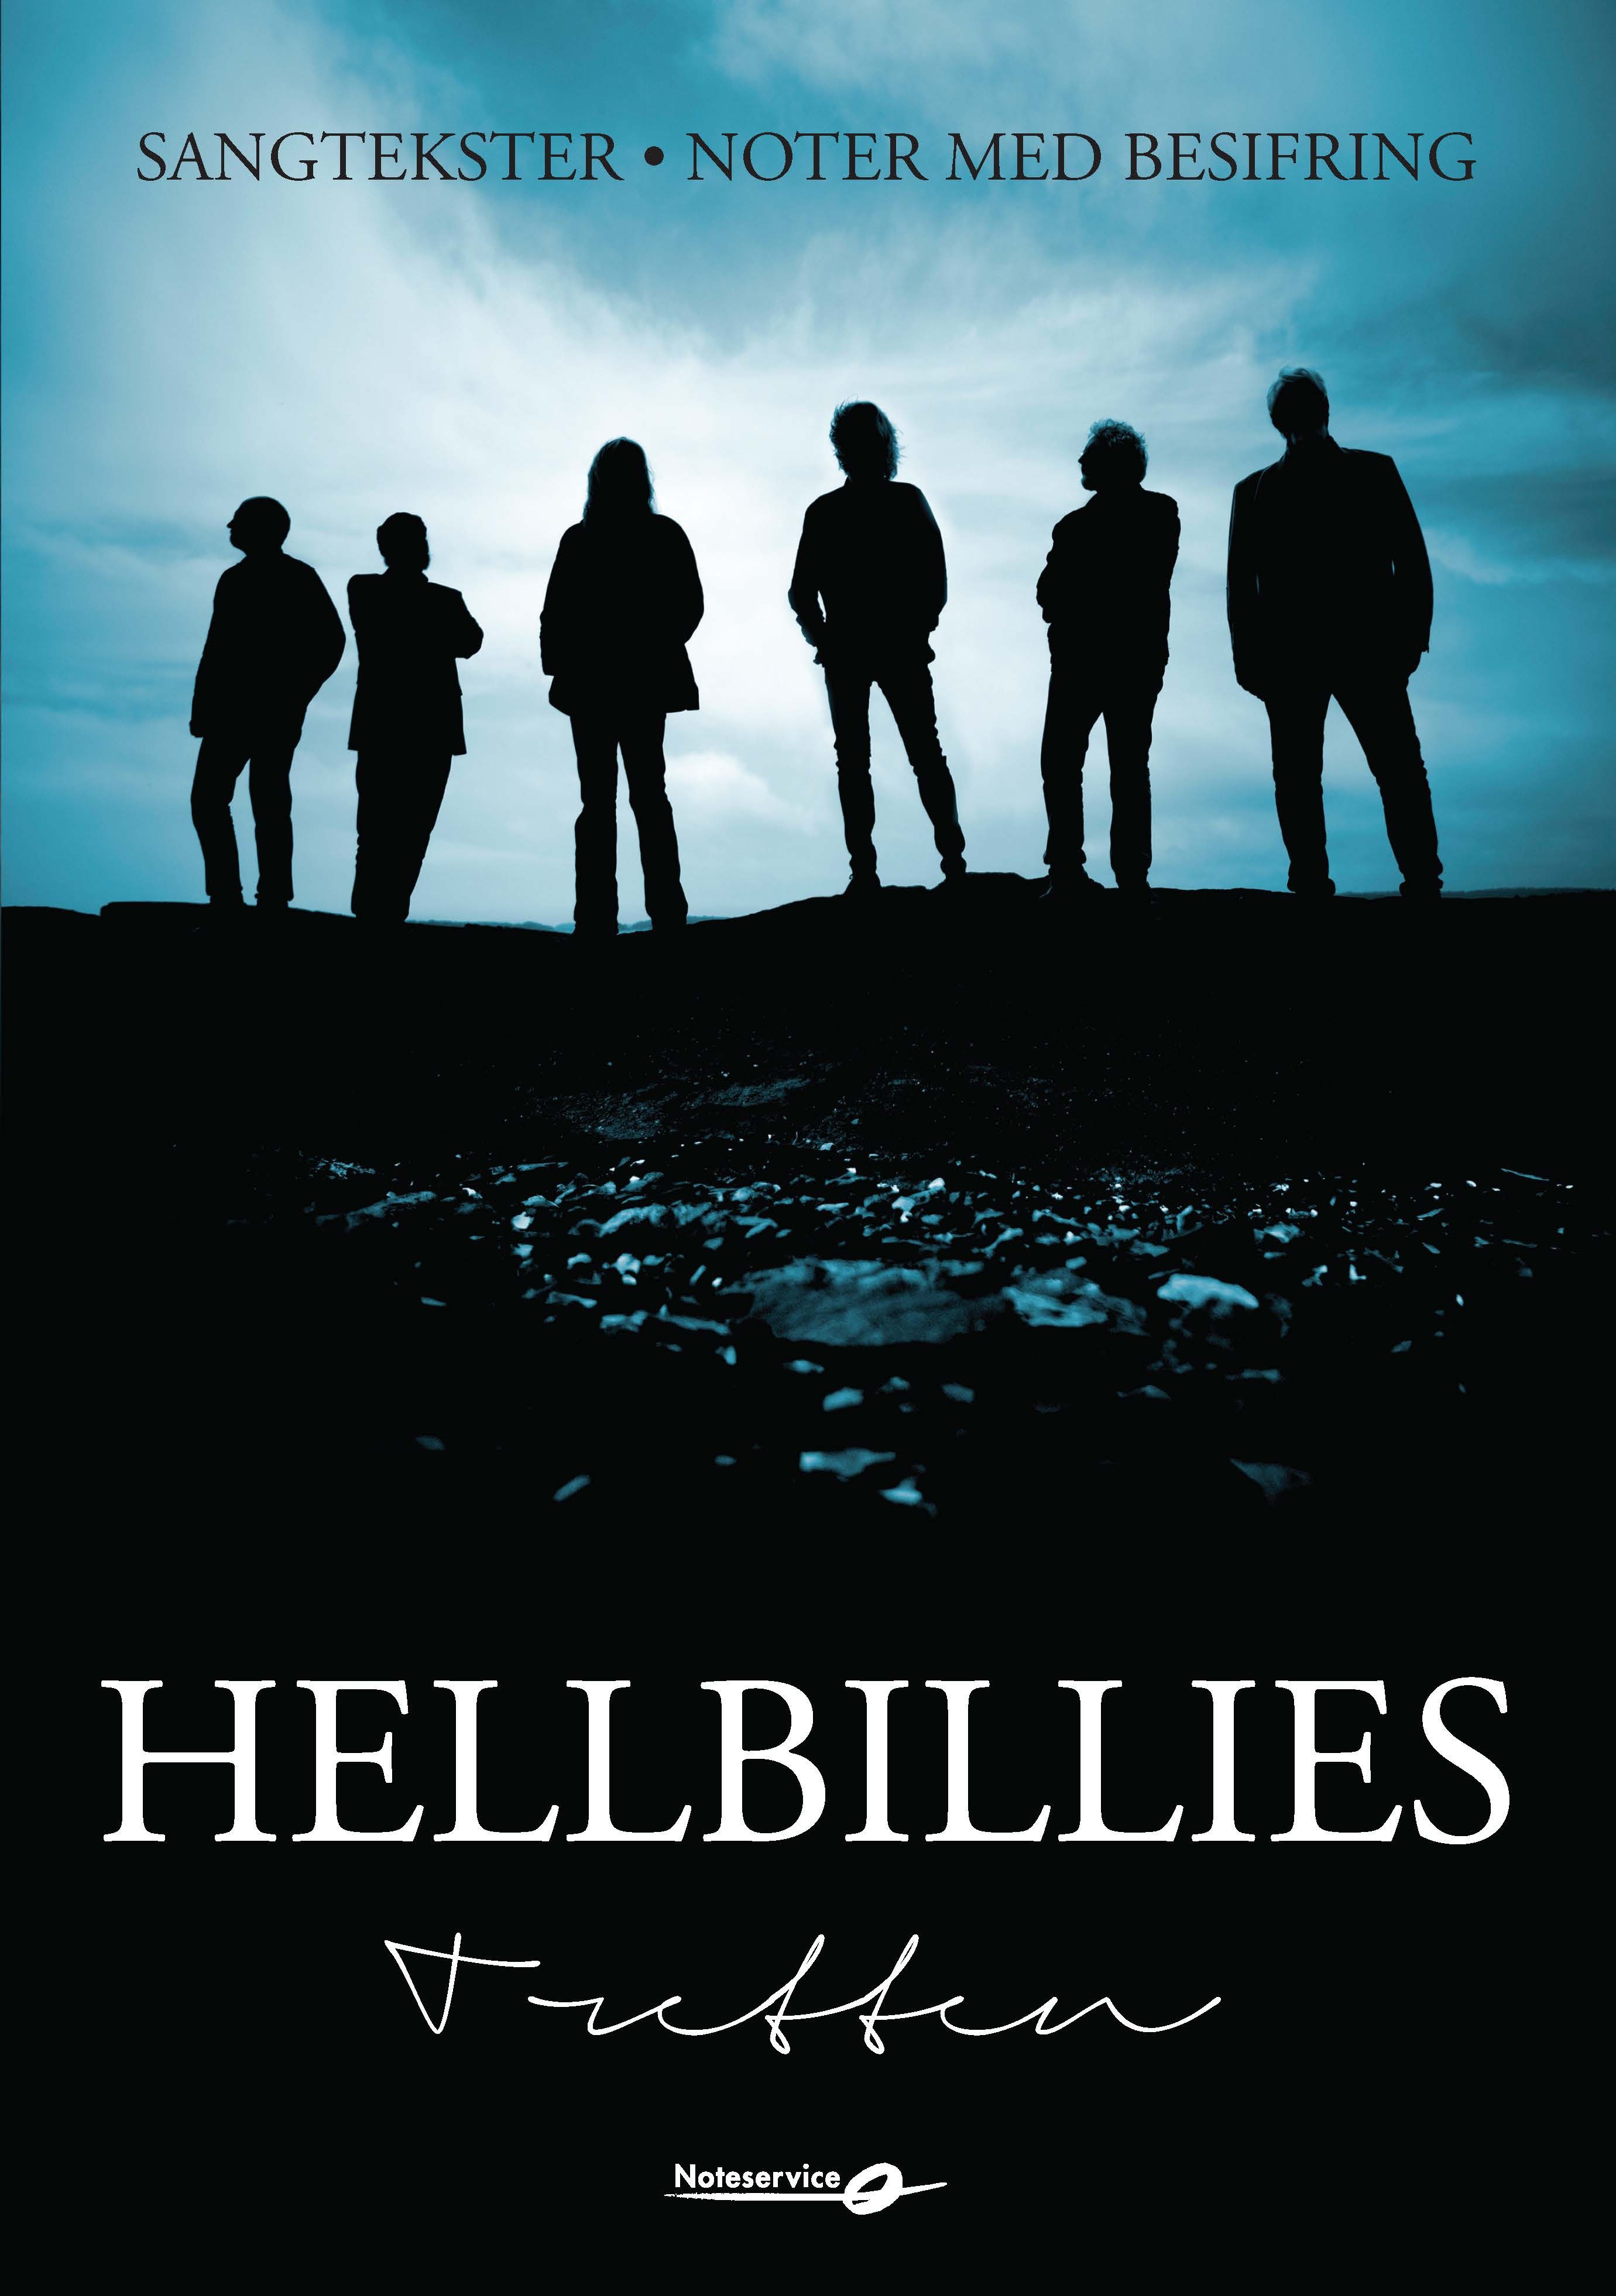 Hellbillies - Tretten - sangtekster, noter med besifring